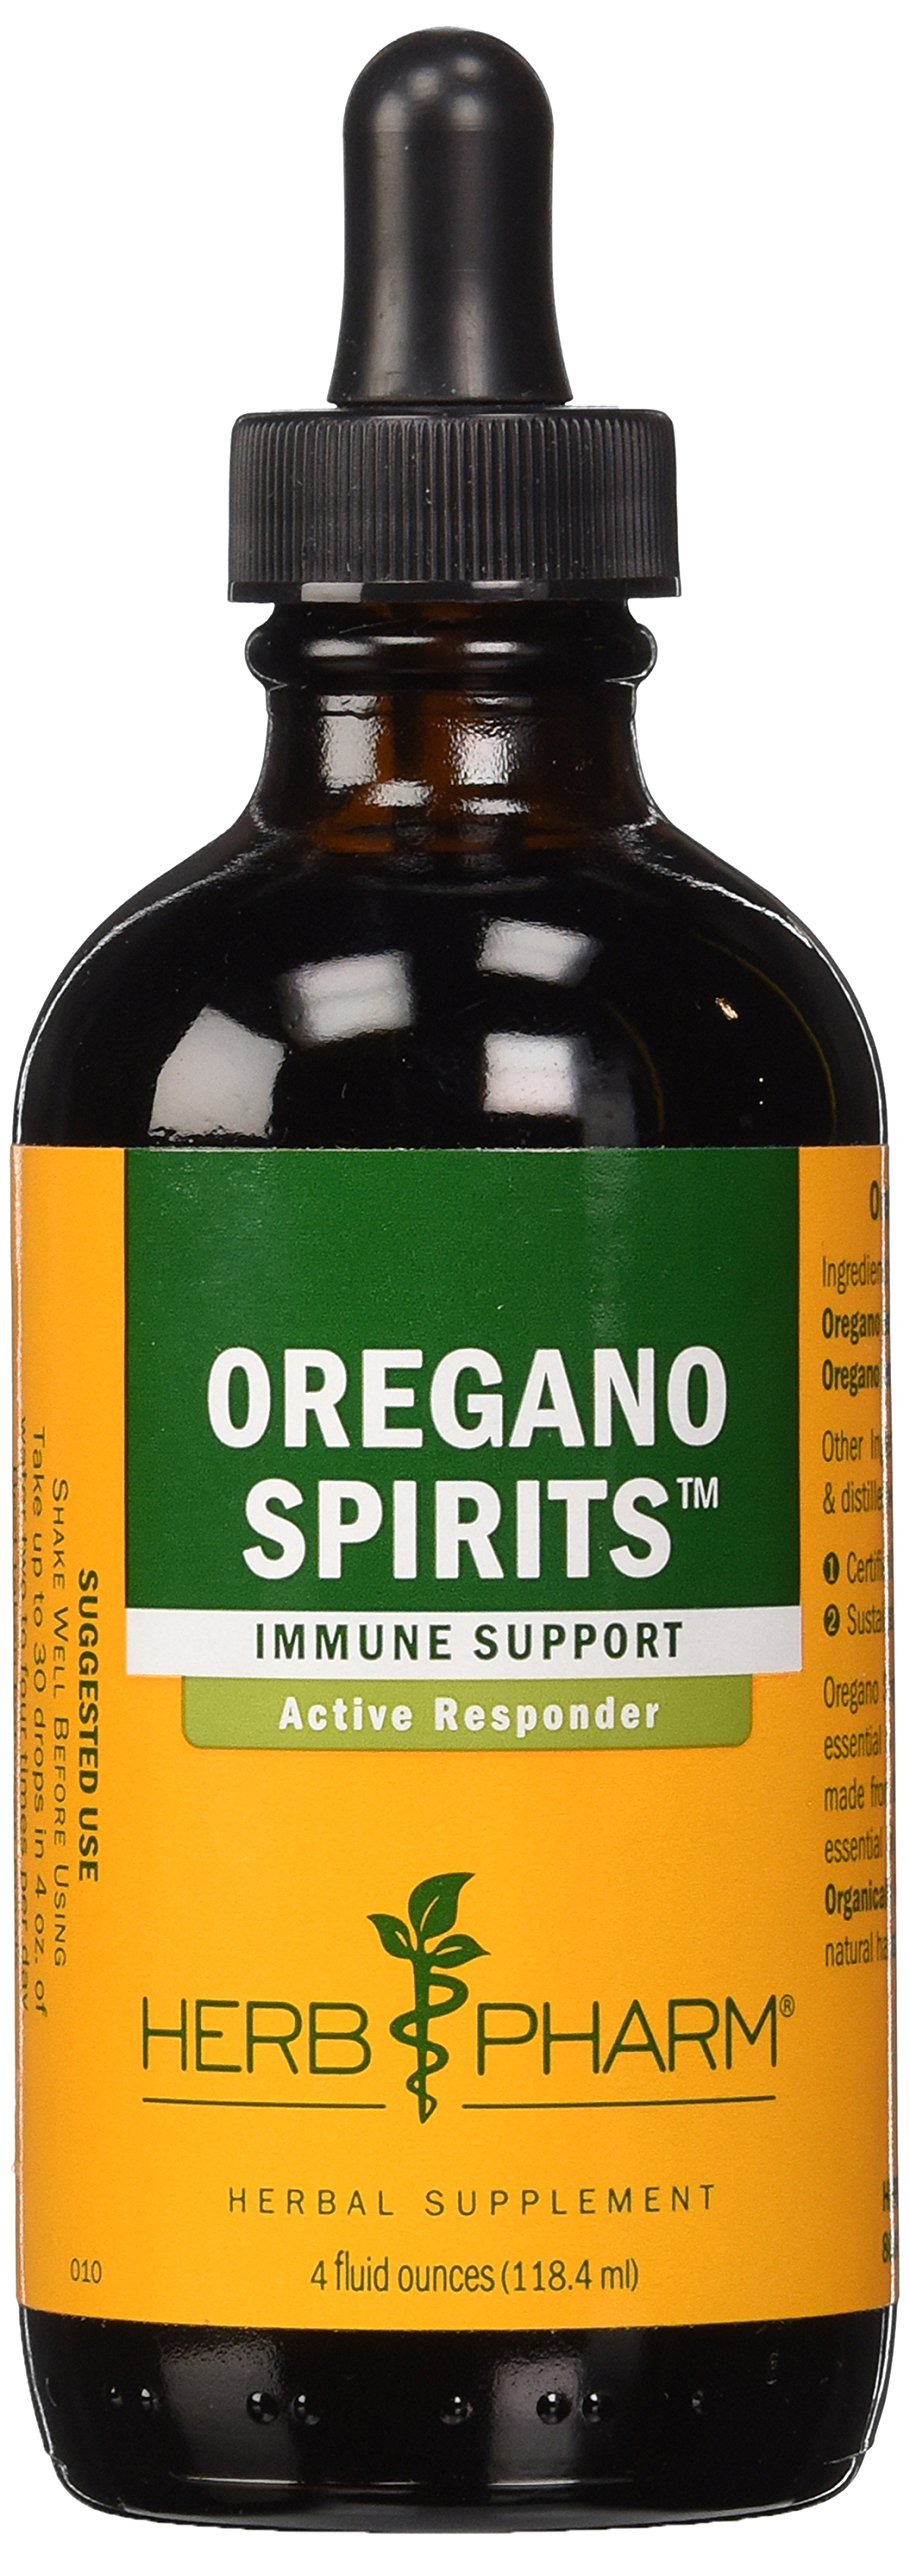 herb pharm oregano spirits review